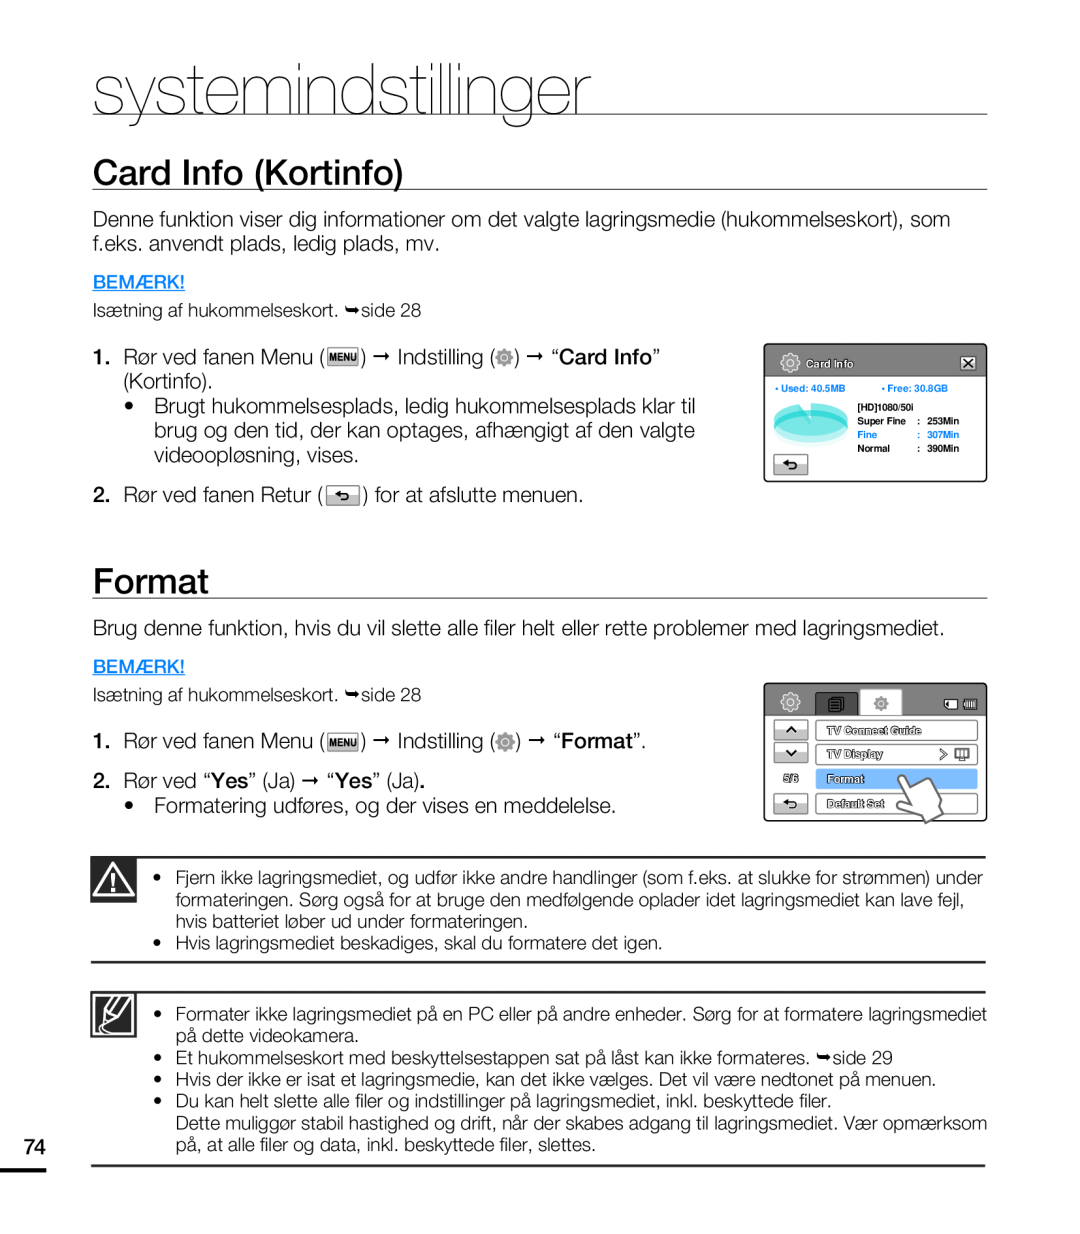 Samsung HMX-T10WP/EDC, HMX-T10BP/EDC manual Card Info Kortinfo, Format, systemindstillinger 